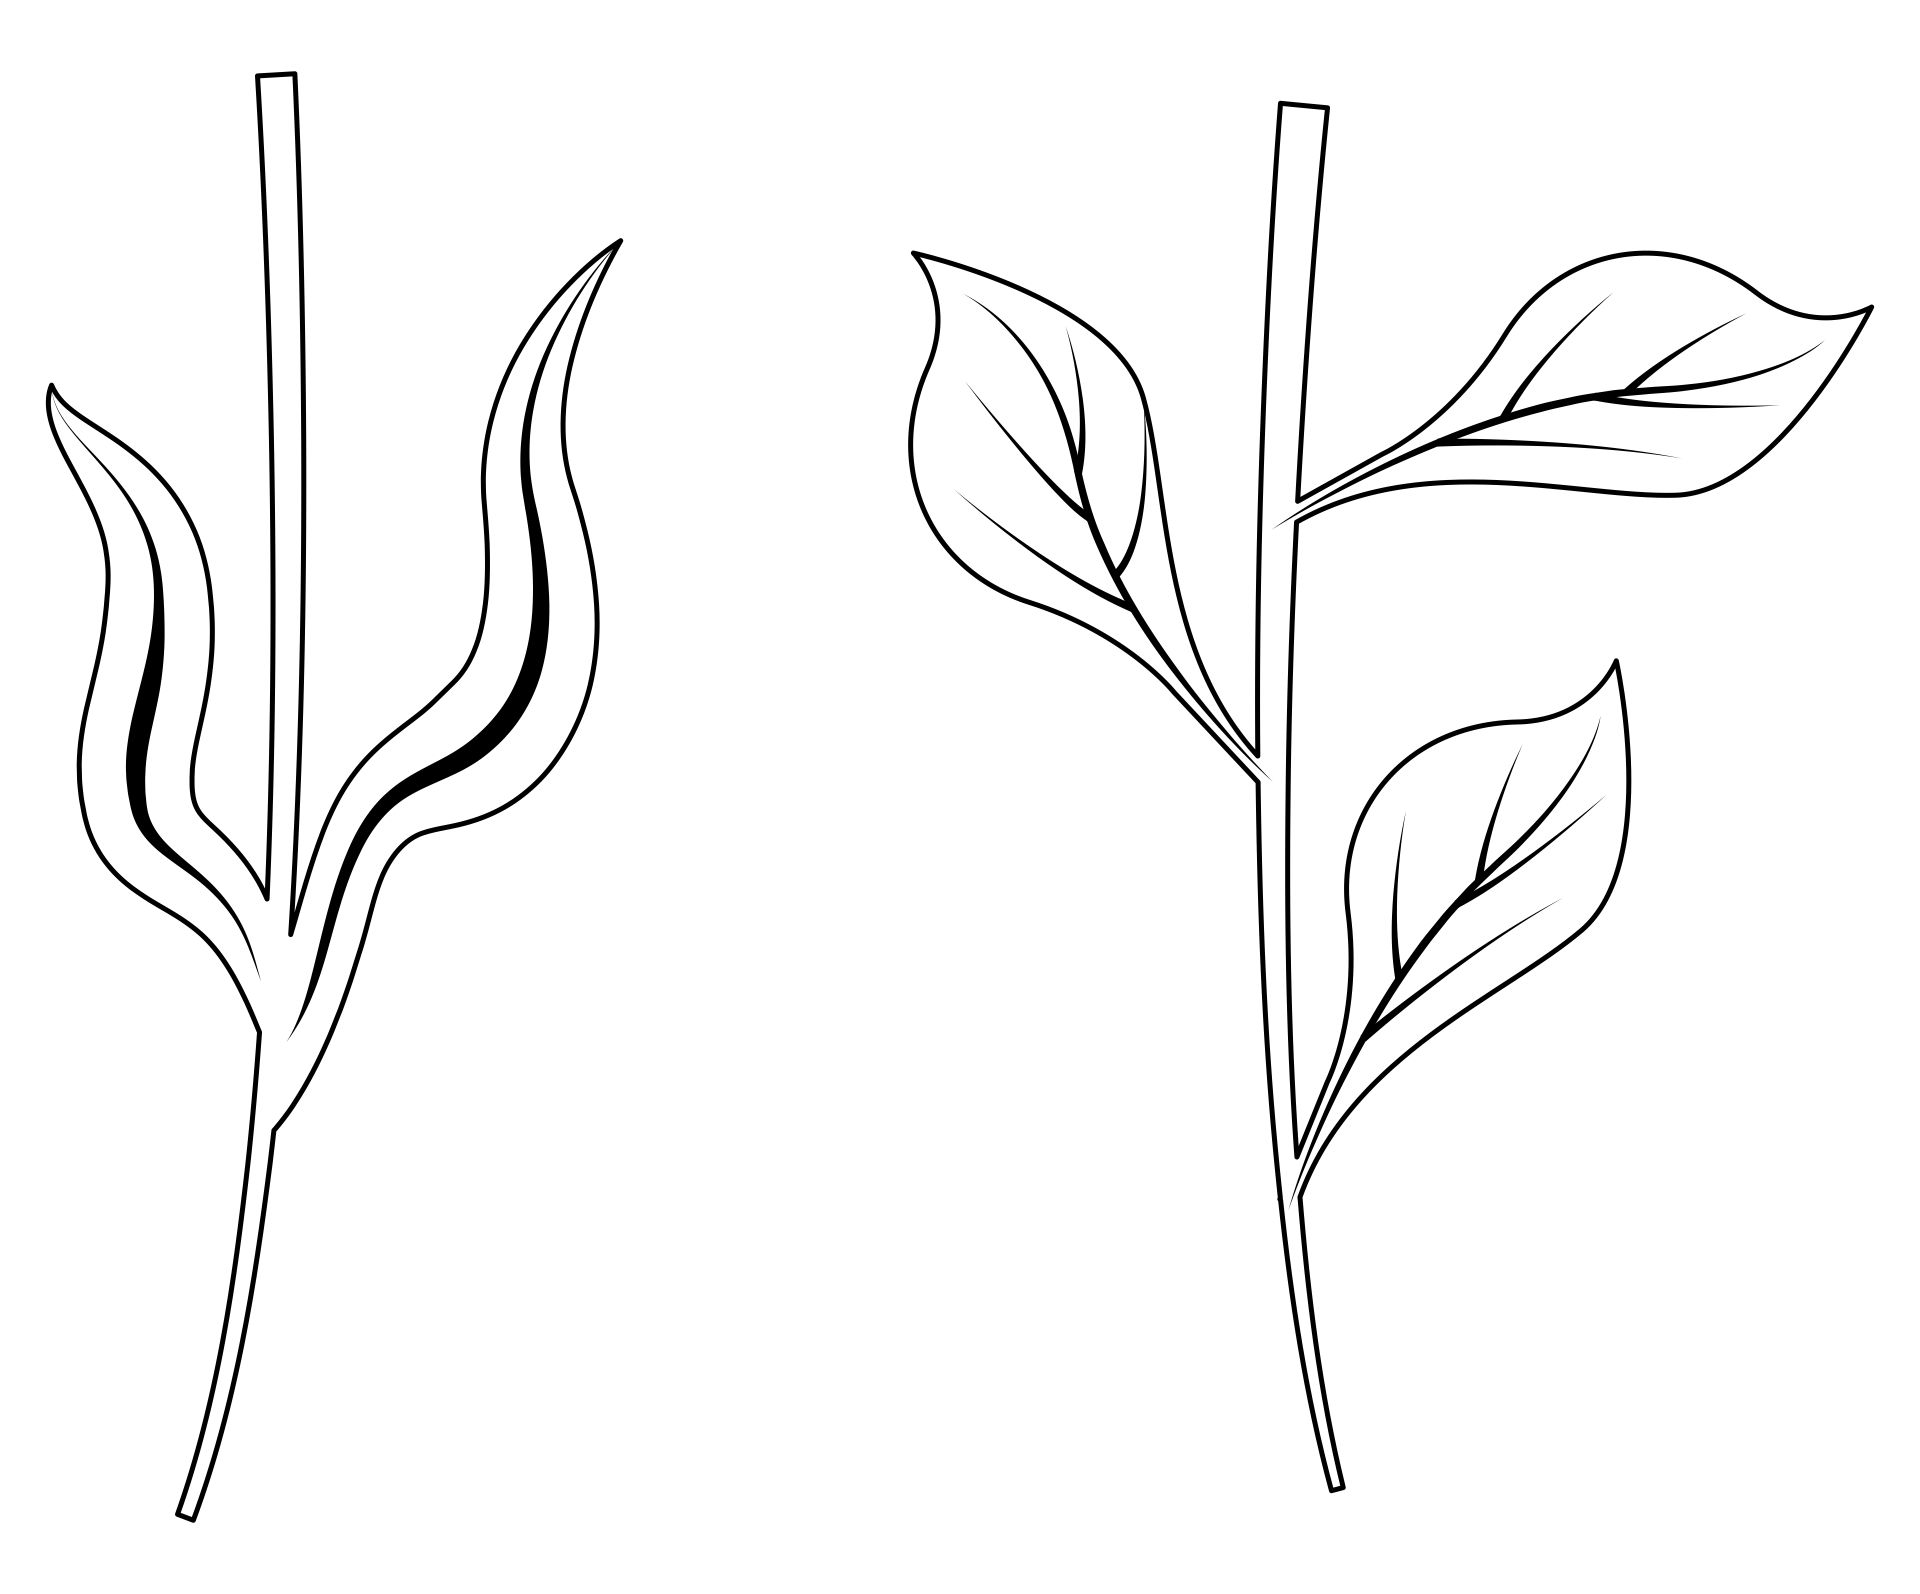 Flower Stem and Leaf Template